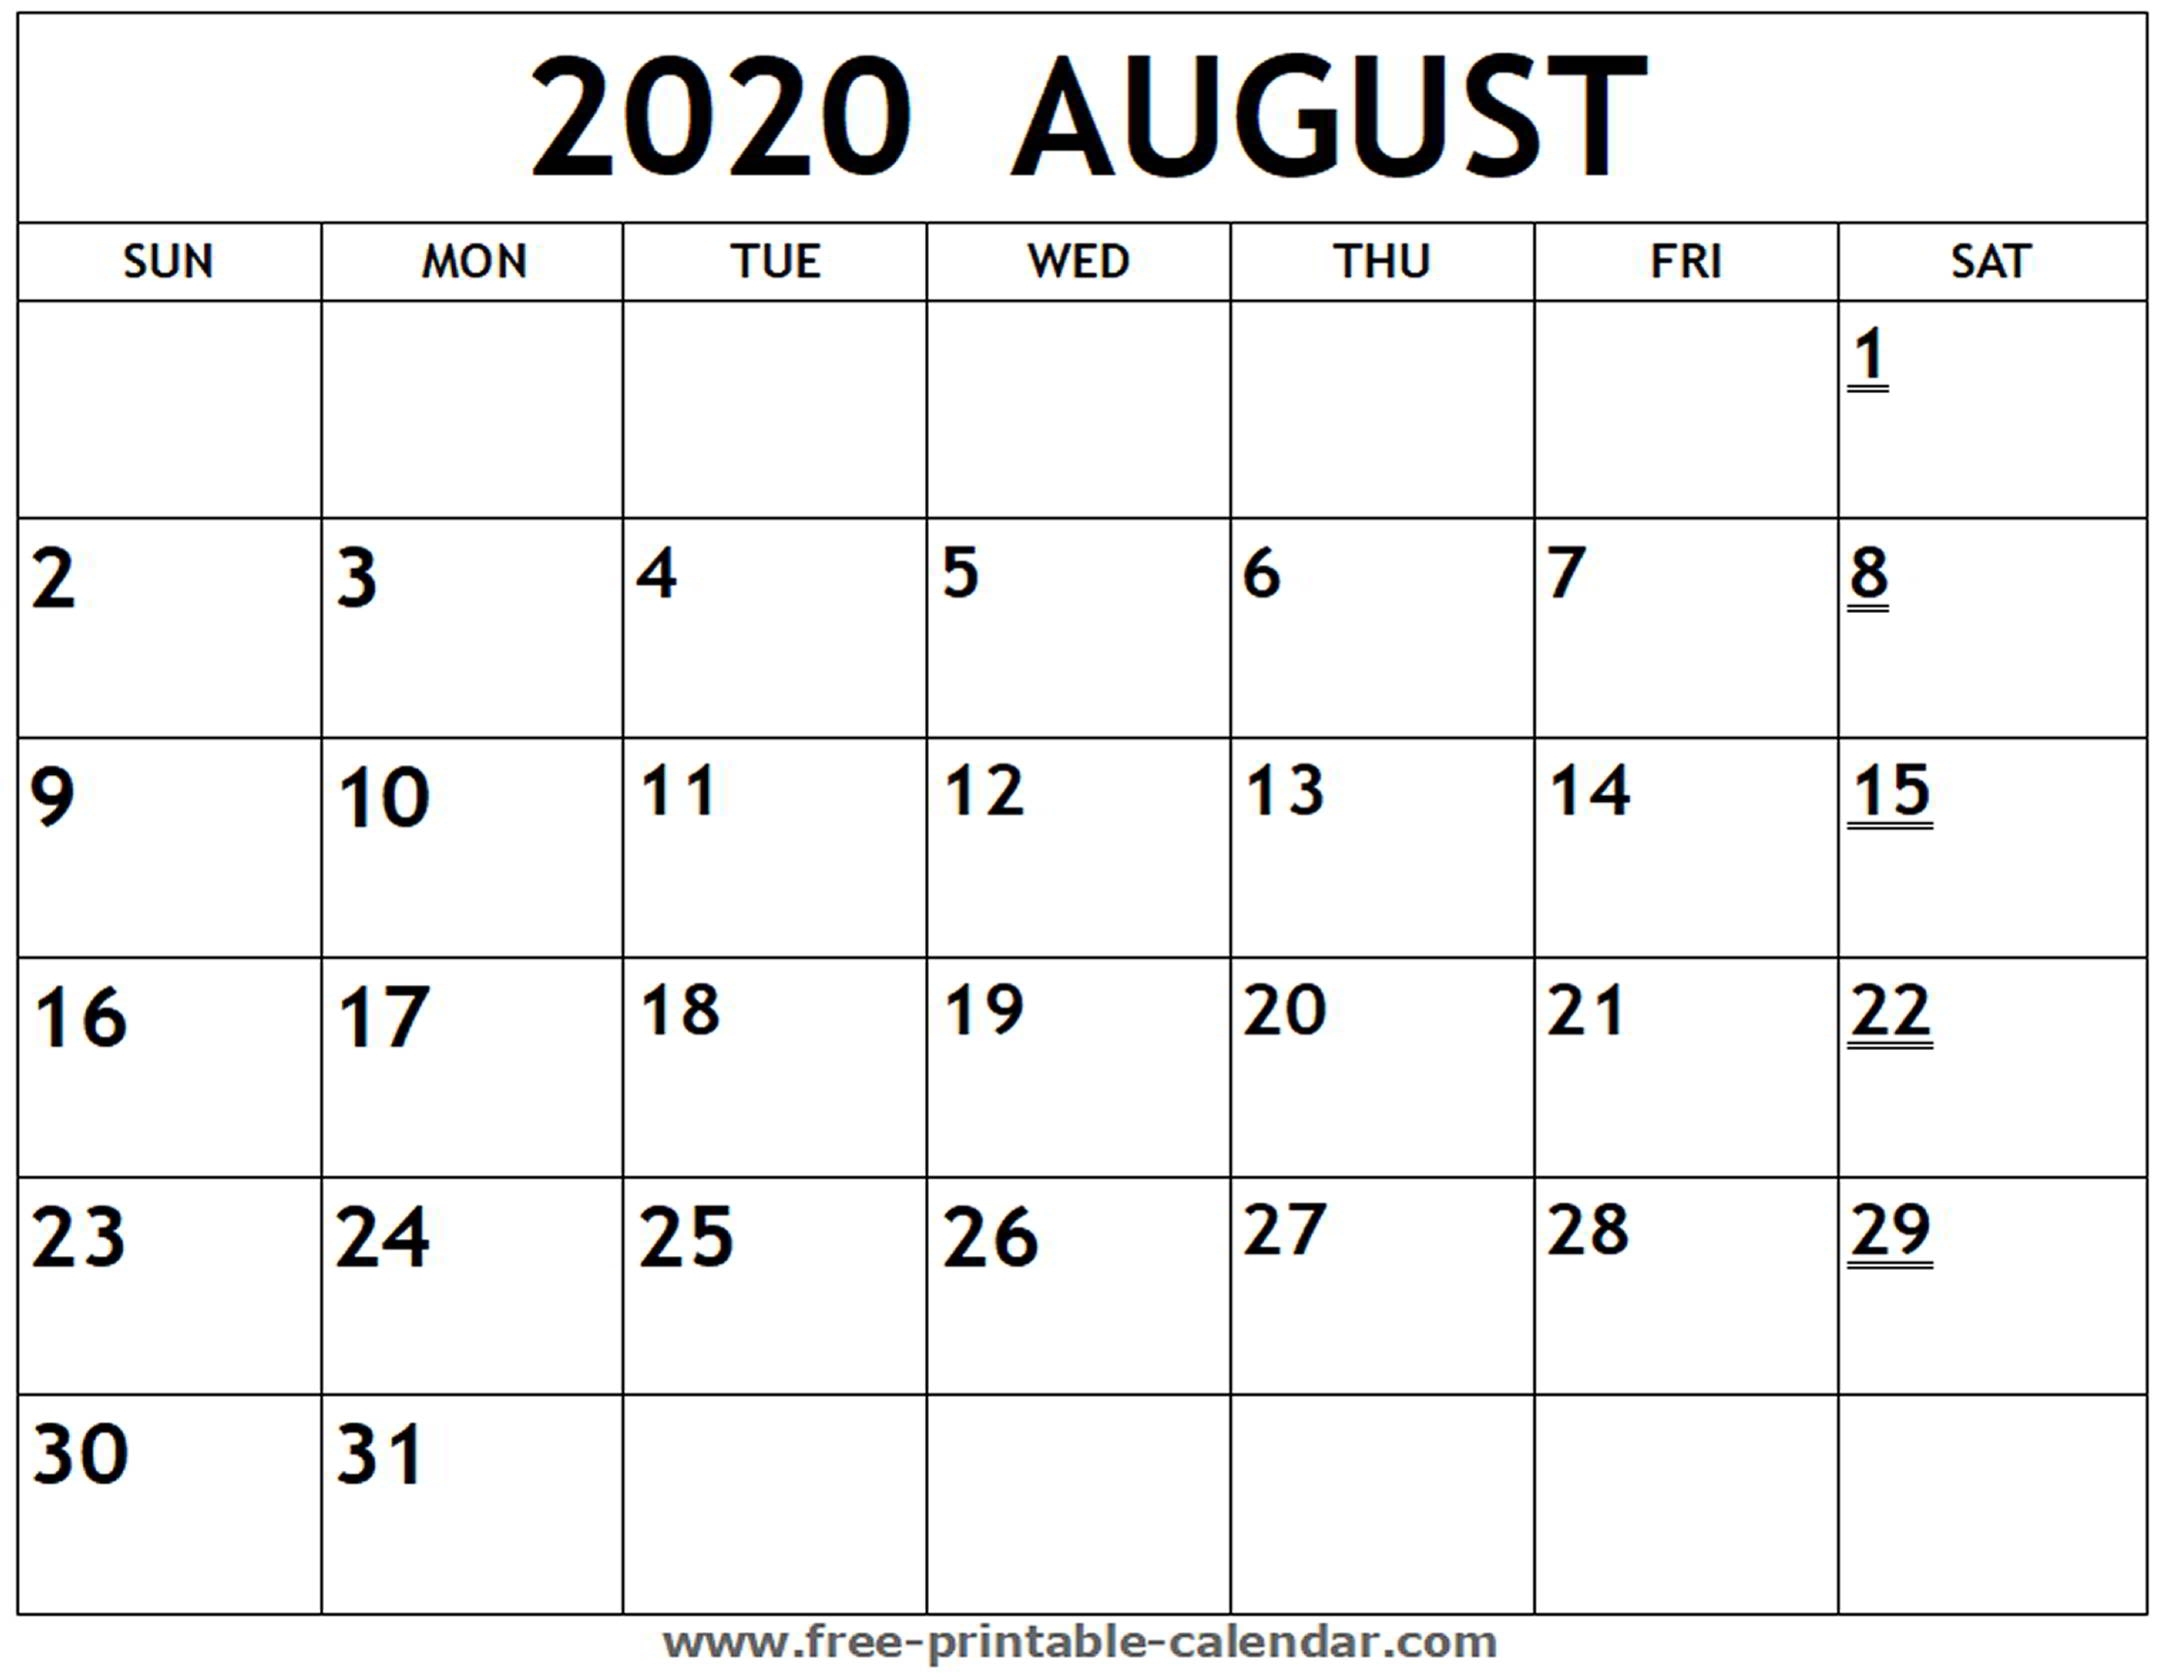 Printable 2020 August Calendar - Free-Printable-Calendar